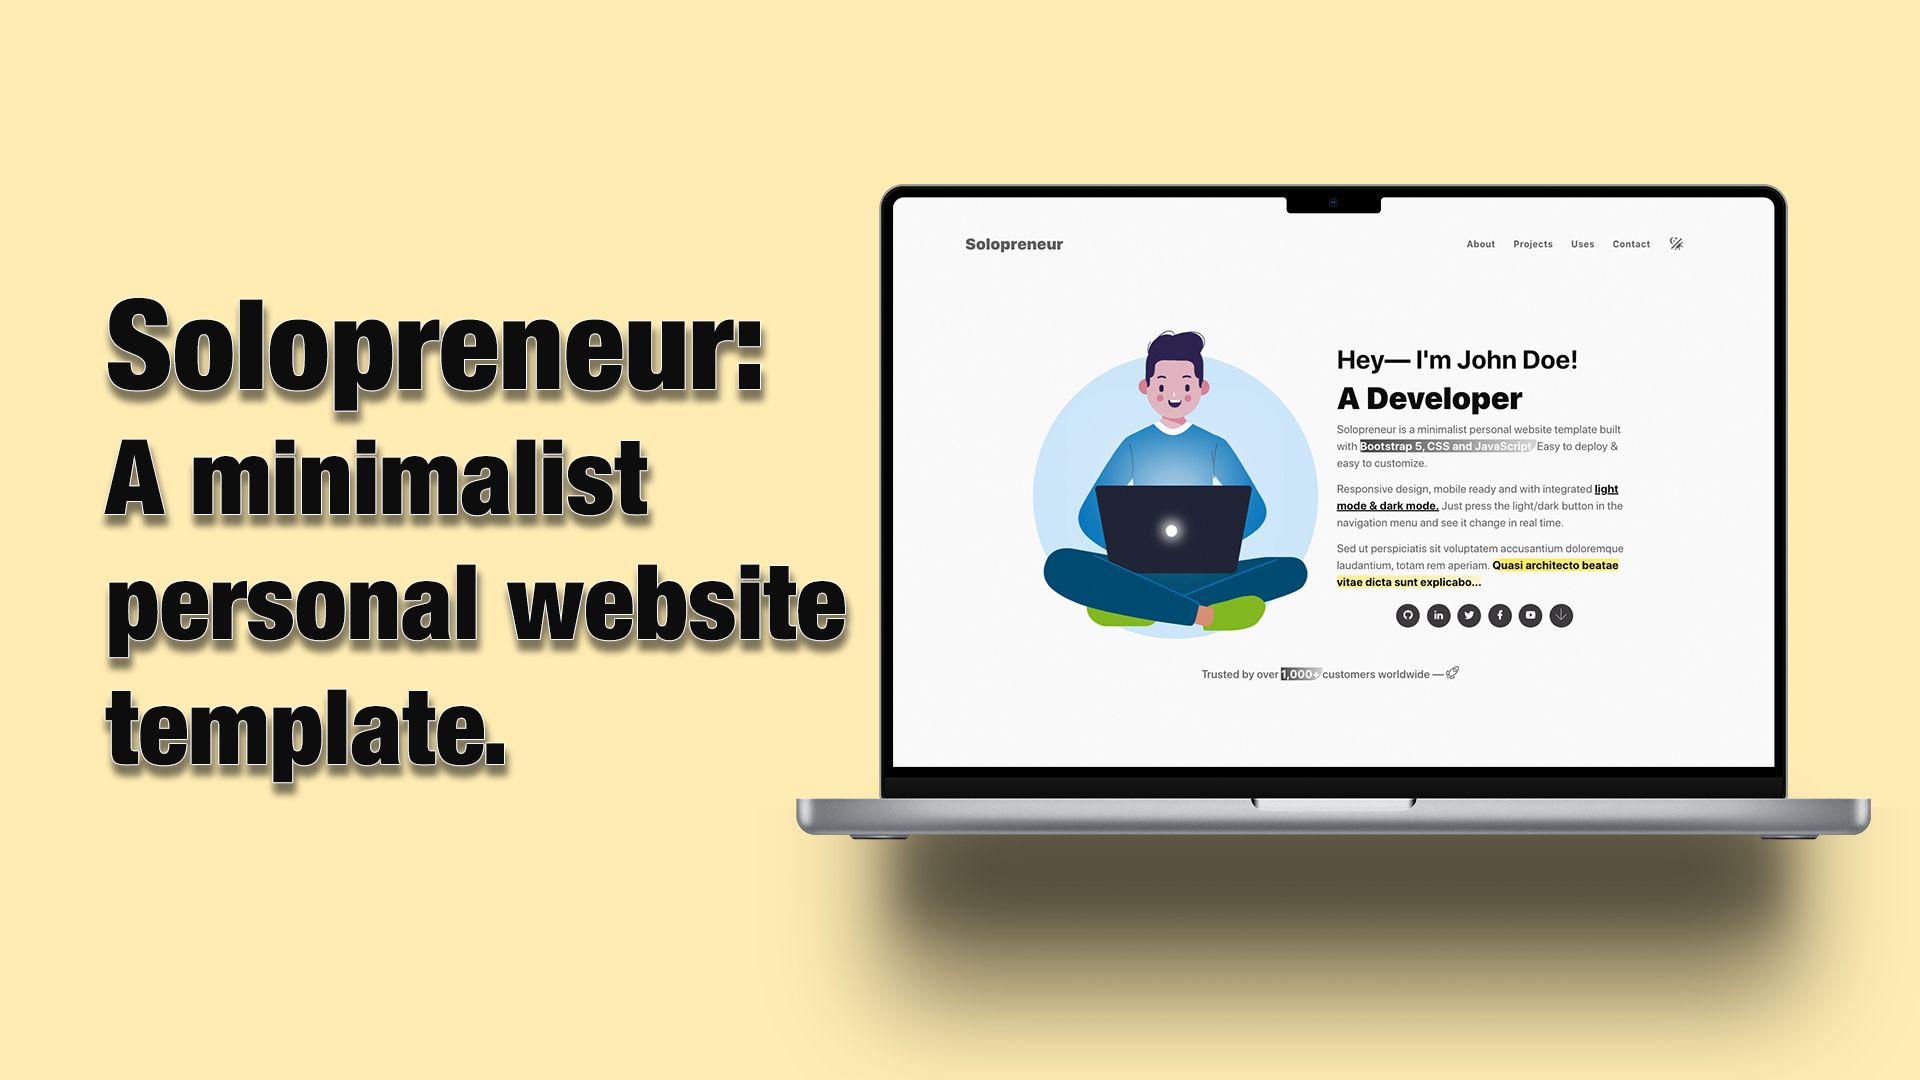 Solopreneur: A Minimalist Personal Website Template